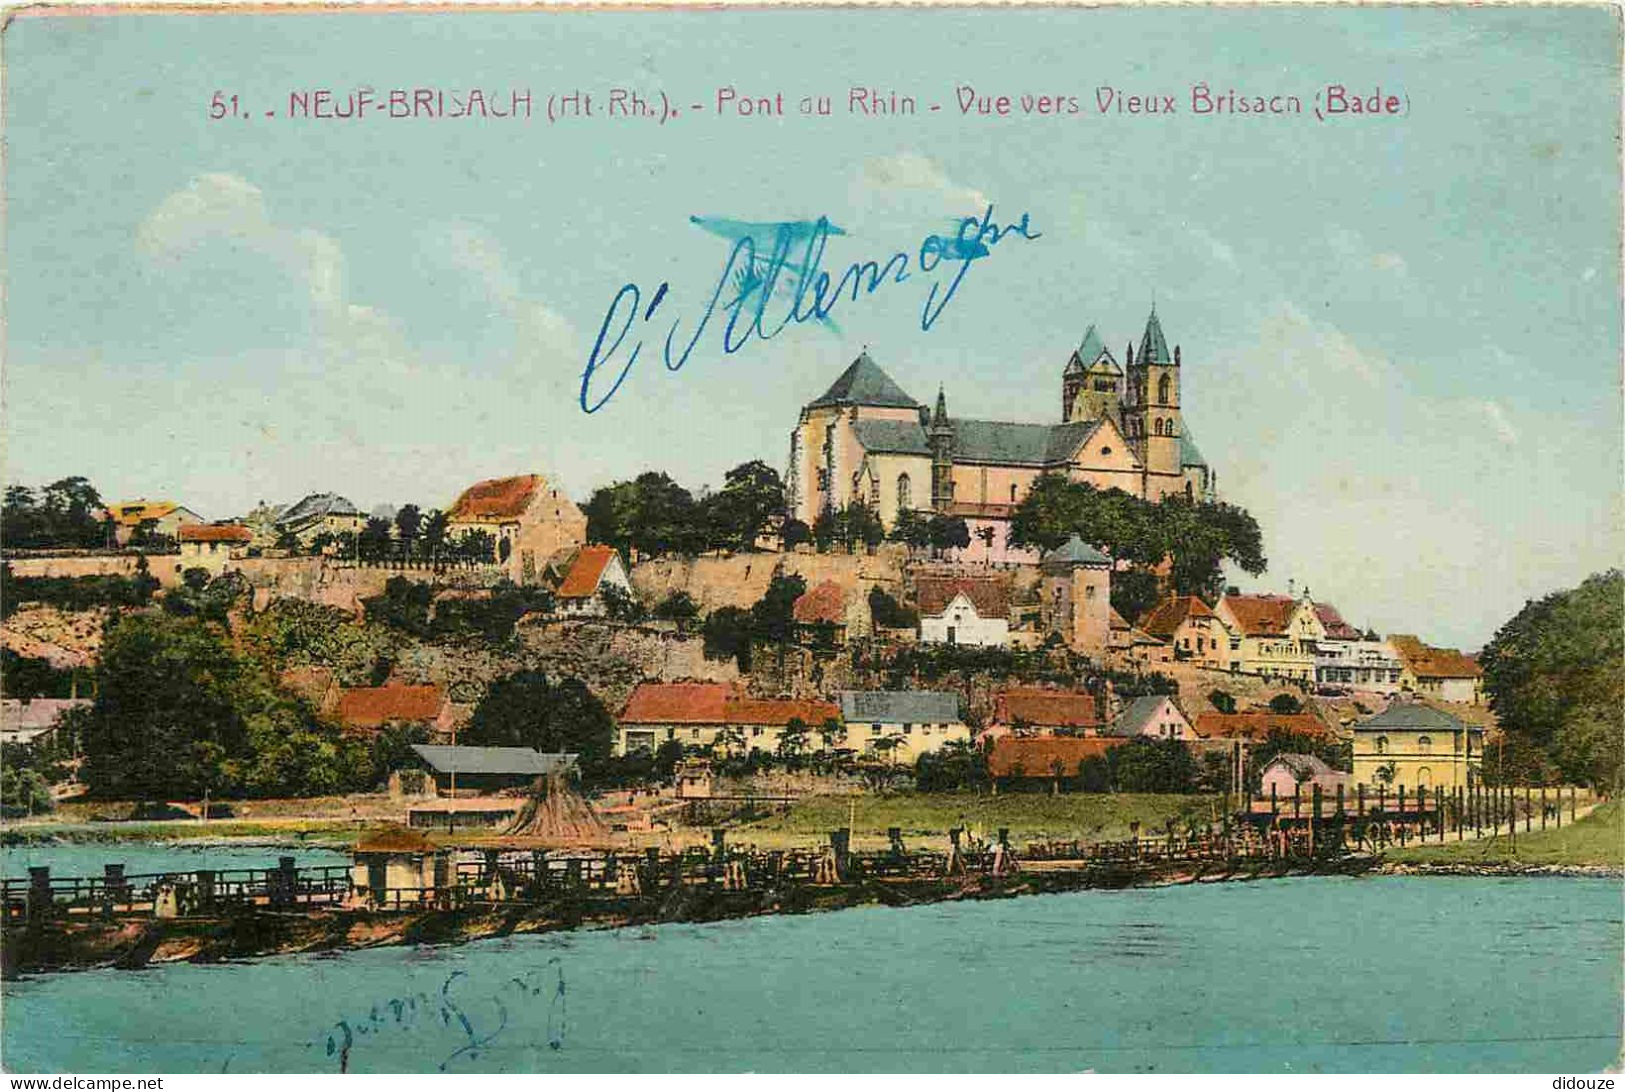 68 - Neuf-Brisach - Pont Du Rhin - Vue Vers Vieux Brisach - Colorisée - CPA - Voir Scans Recto-Verso - Neuf Brisach